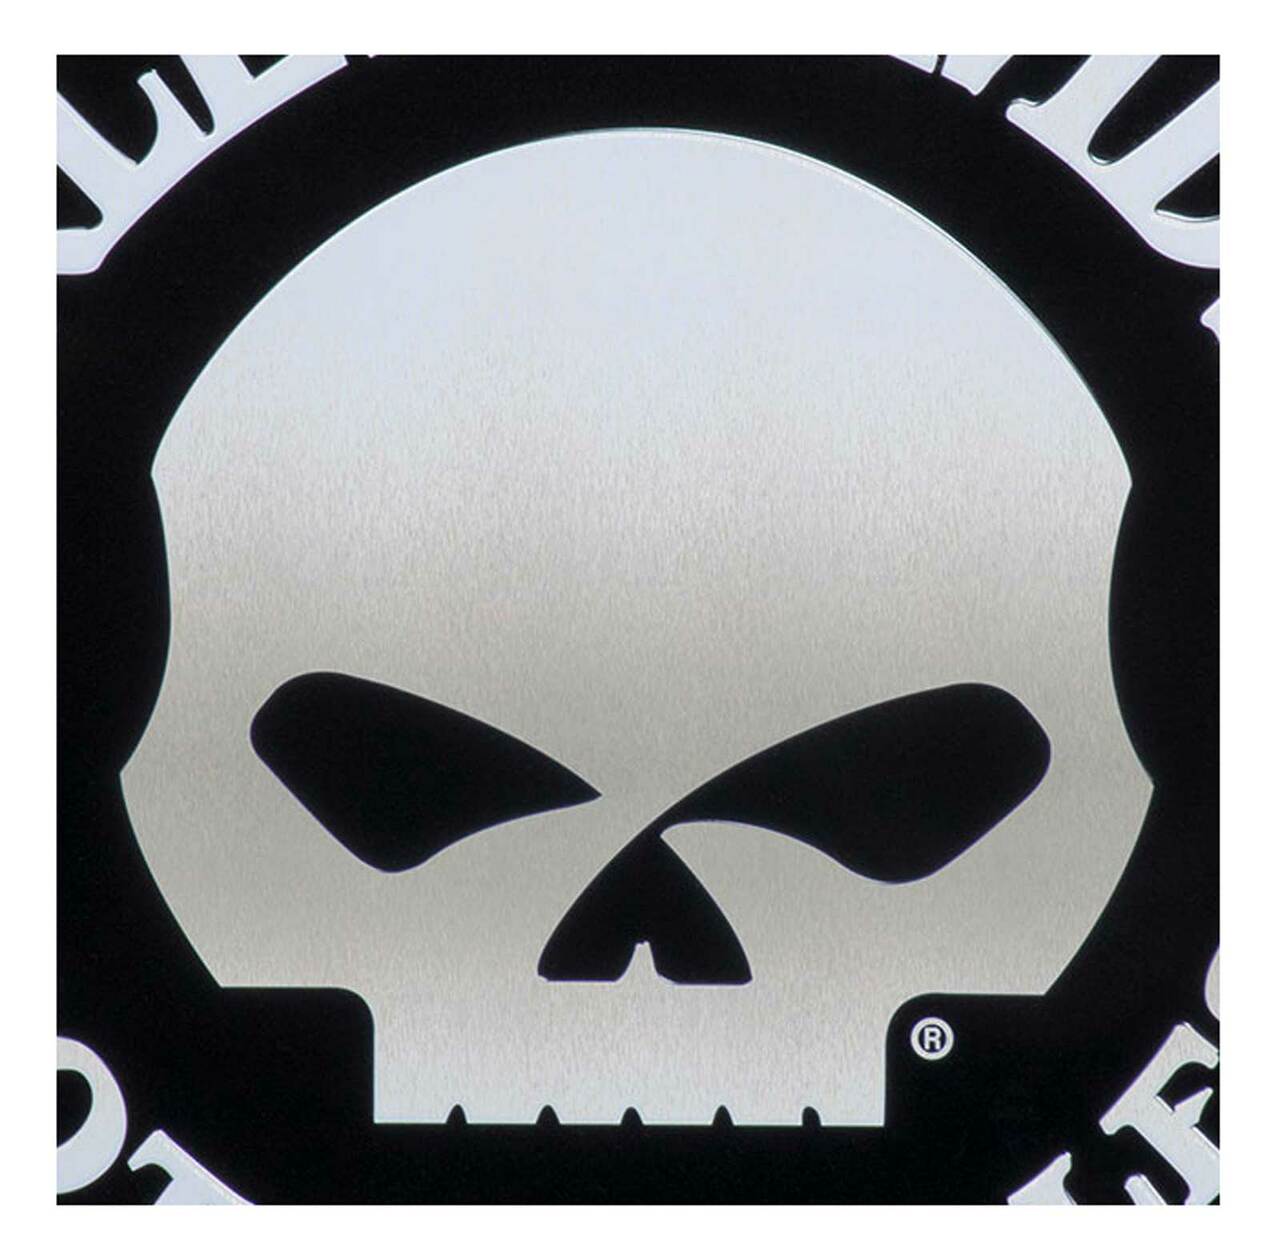 Sign Embossed Tin - Brushed Silver 12" Willie G Skull Logo - Harley-Davidson®